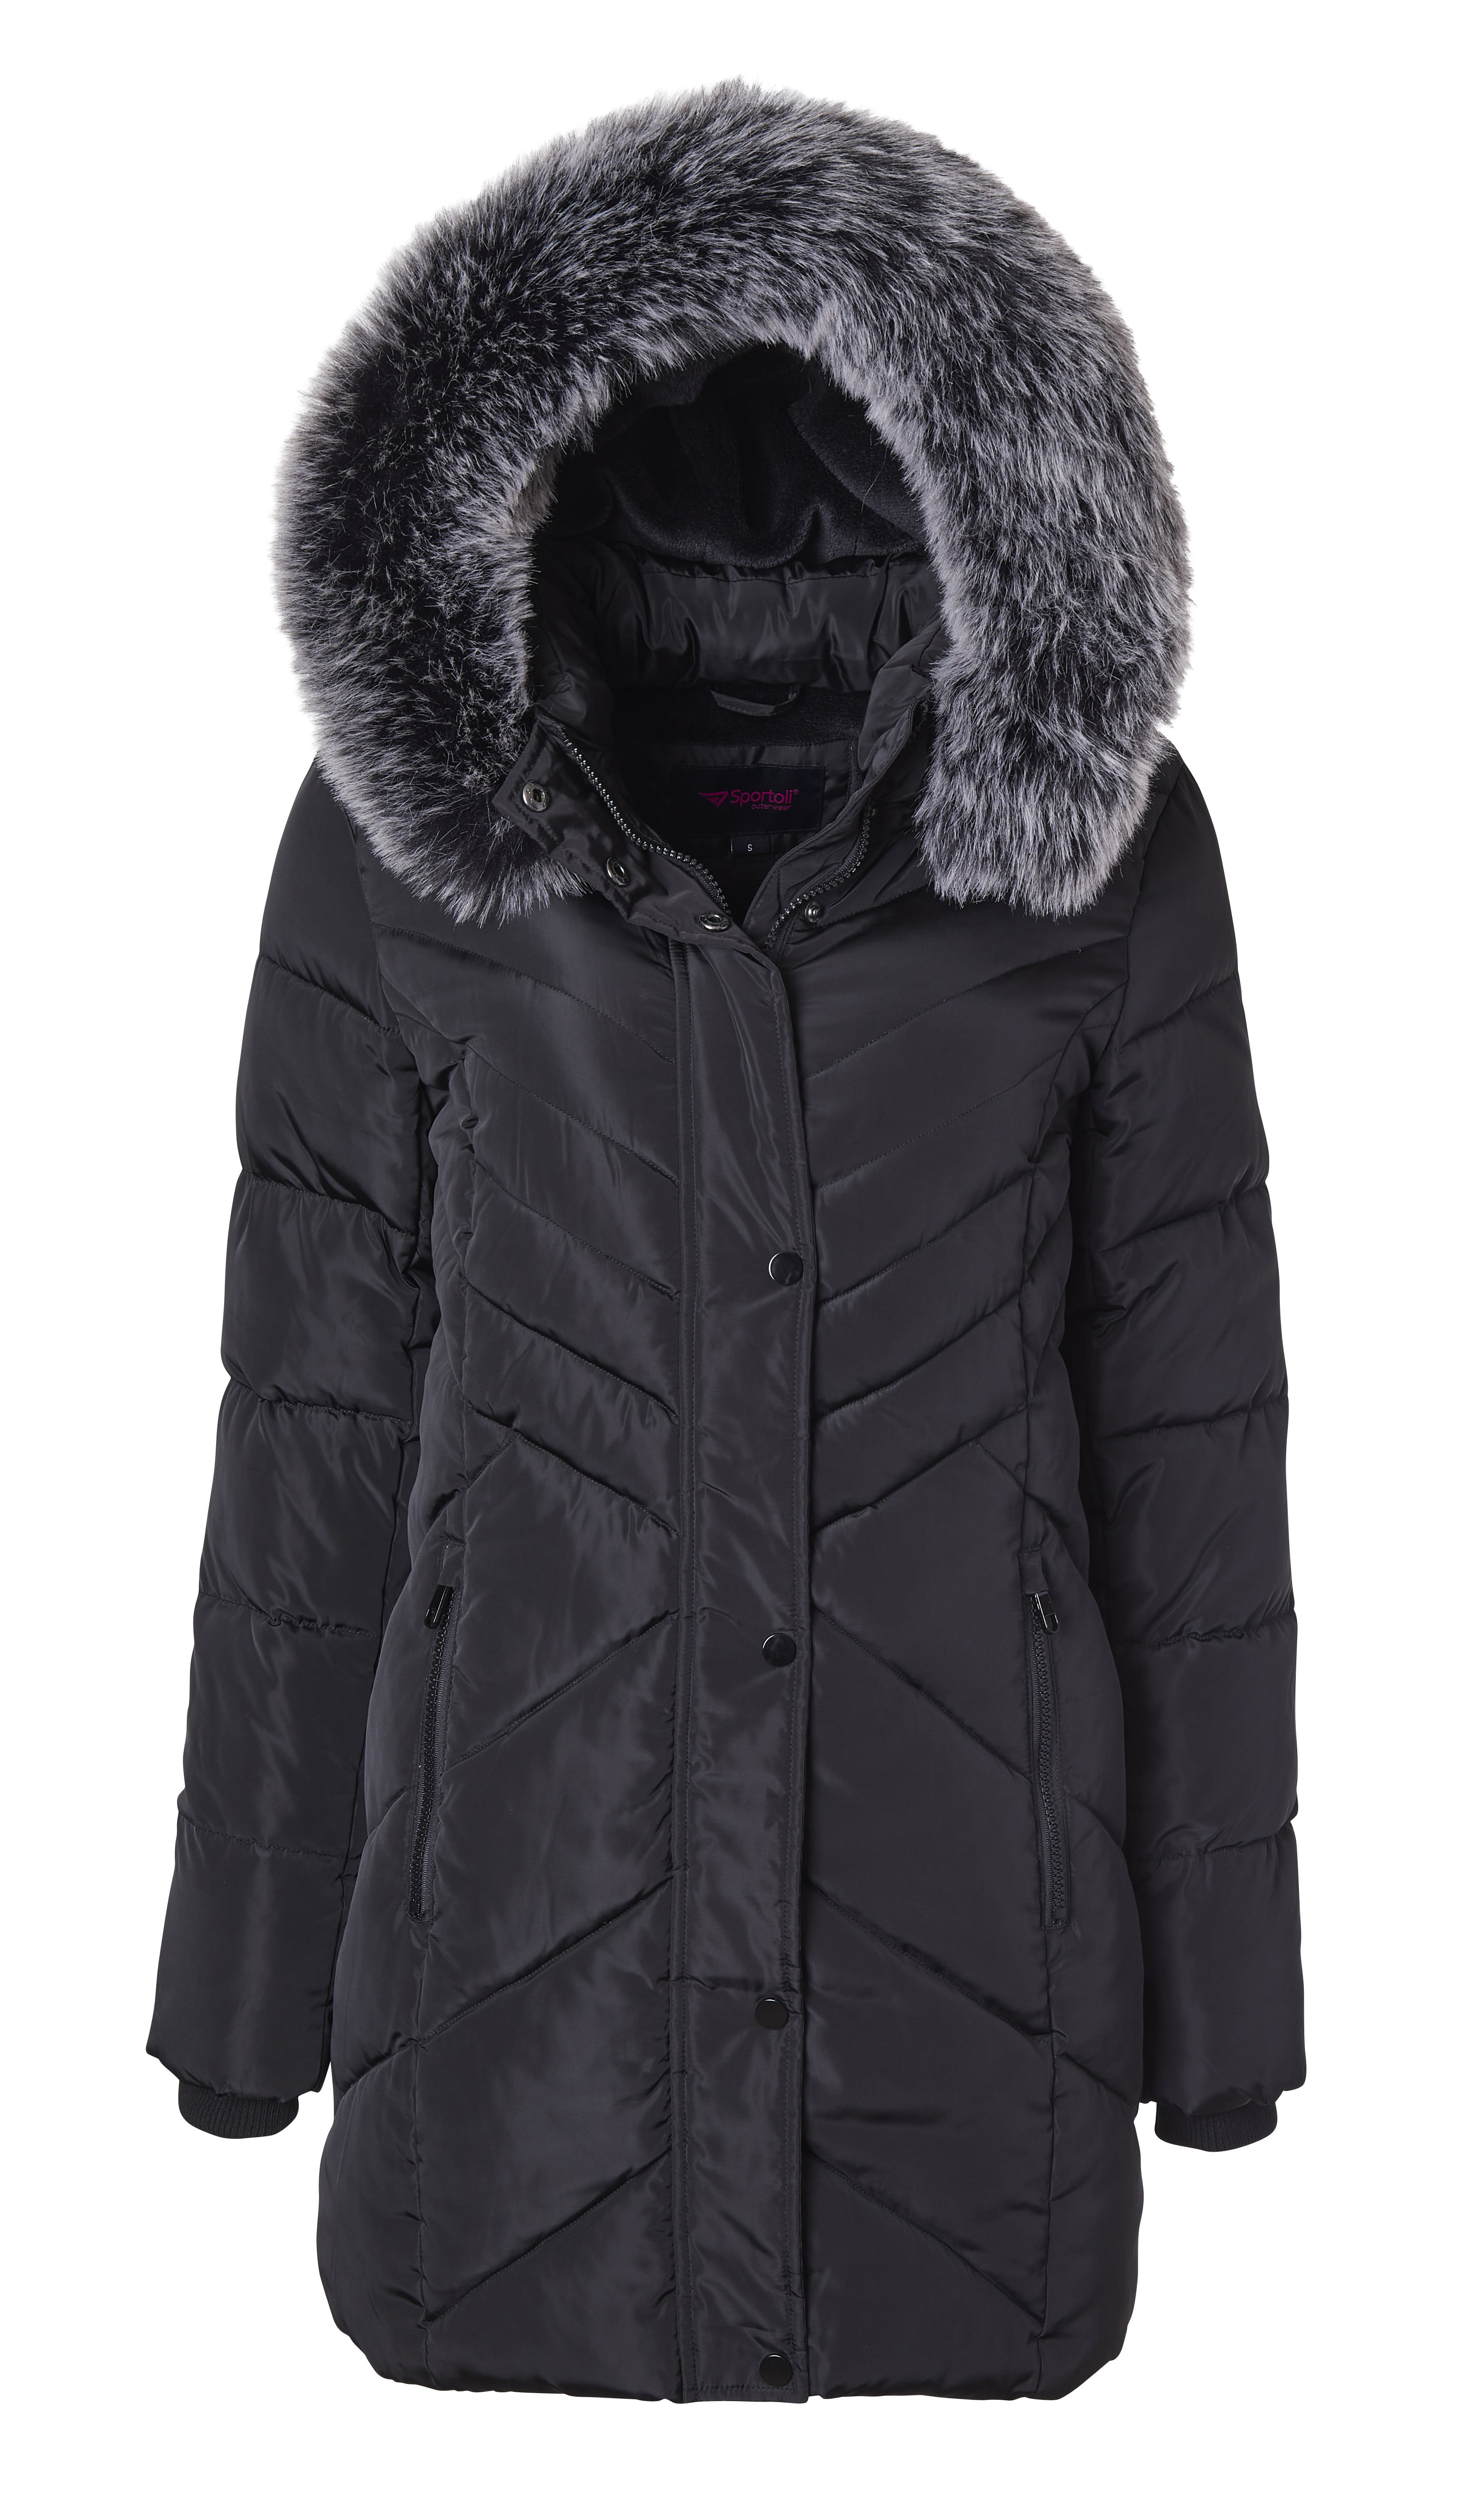 Puffer Jacket With Fur Hood Long - jacketl